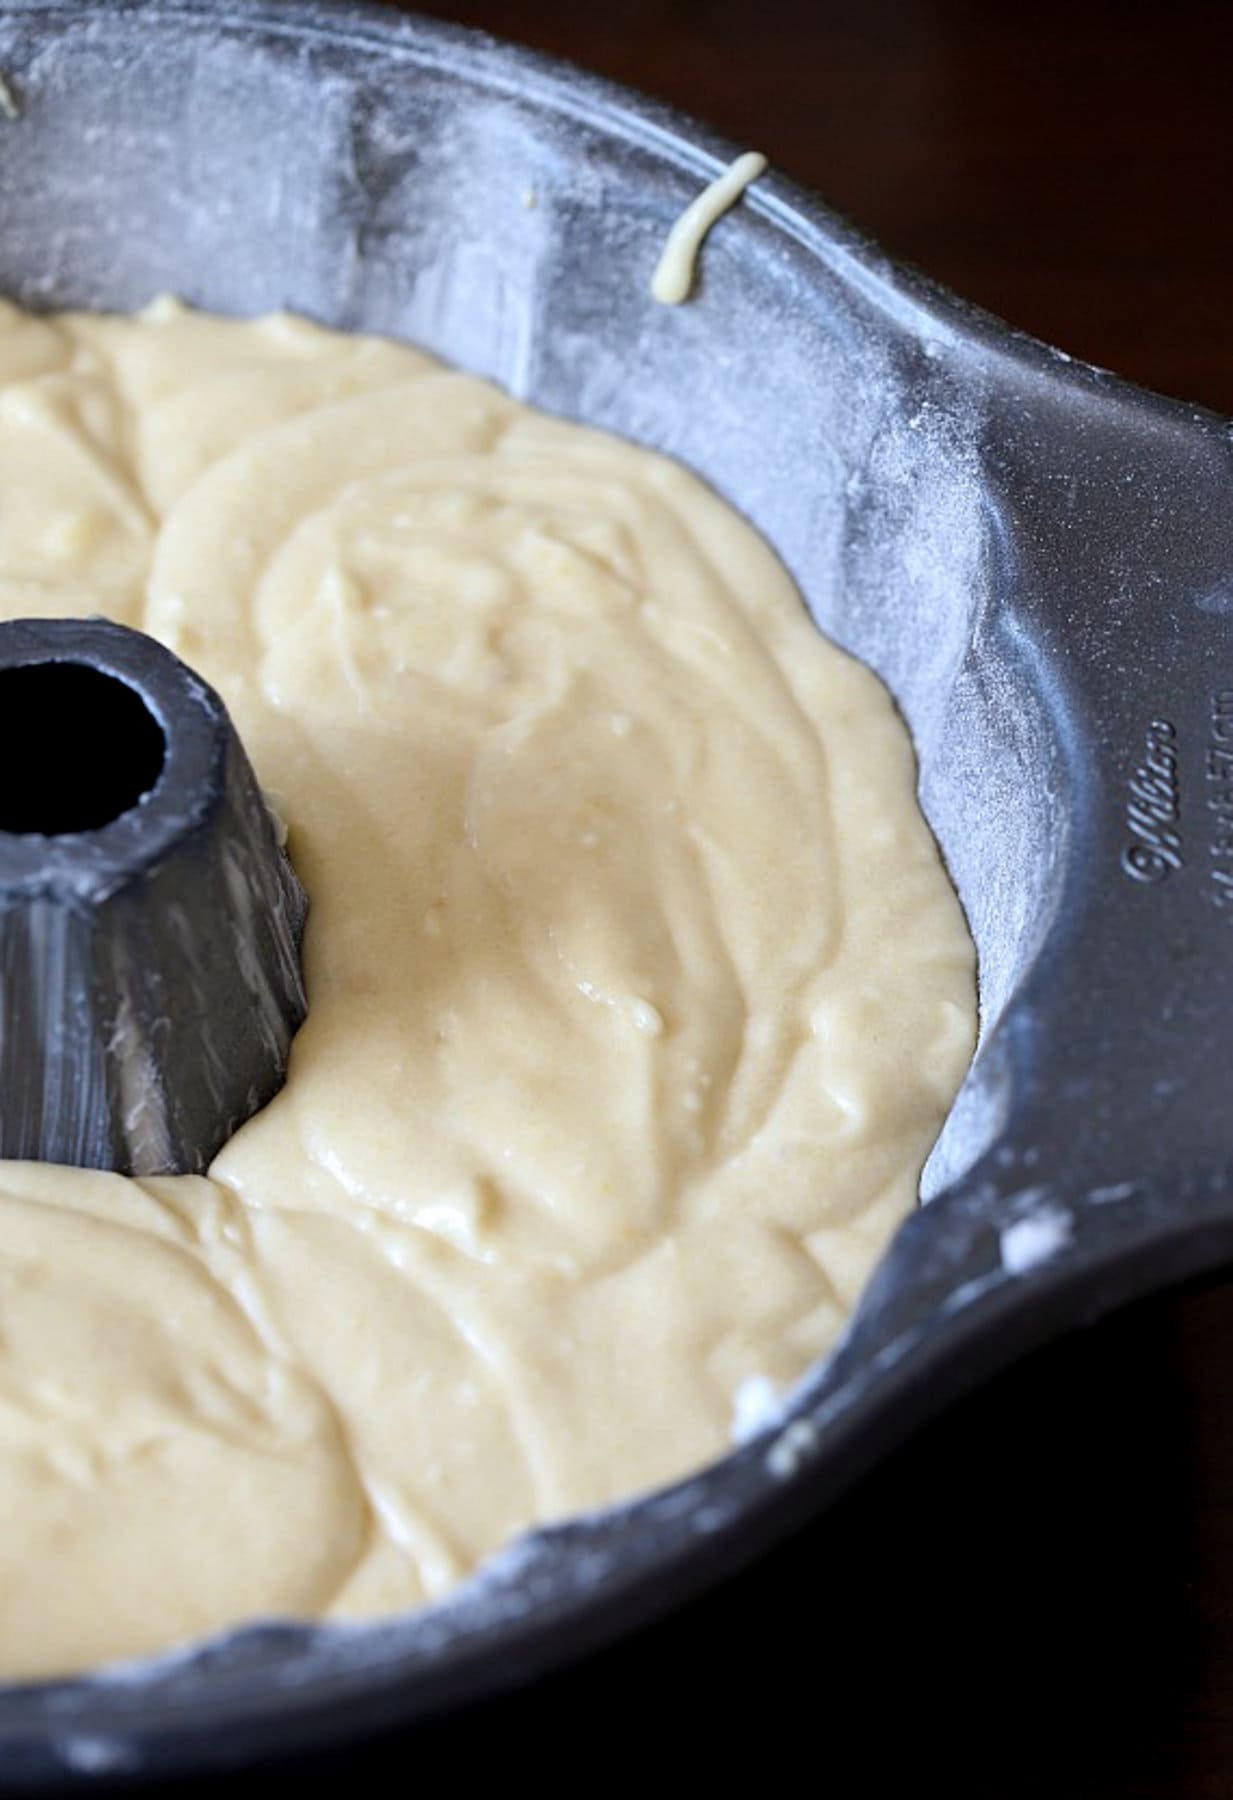 A grey bundt pan with cake batter inside